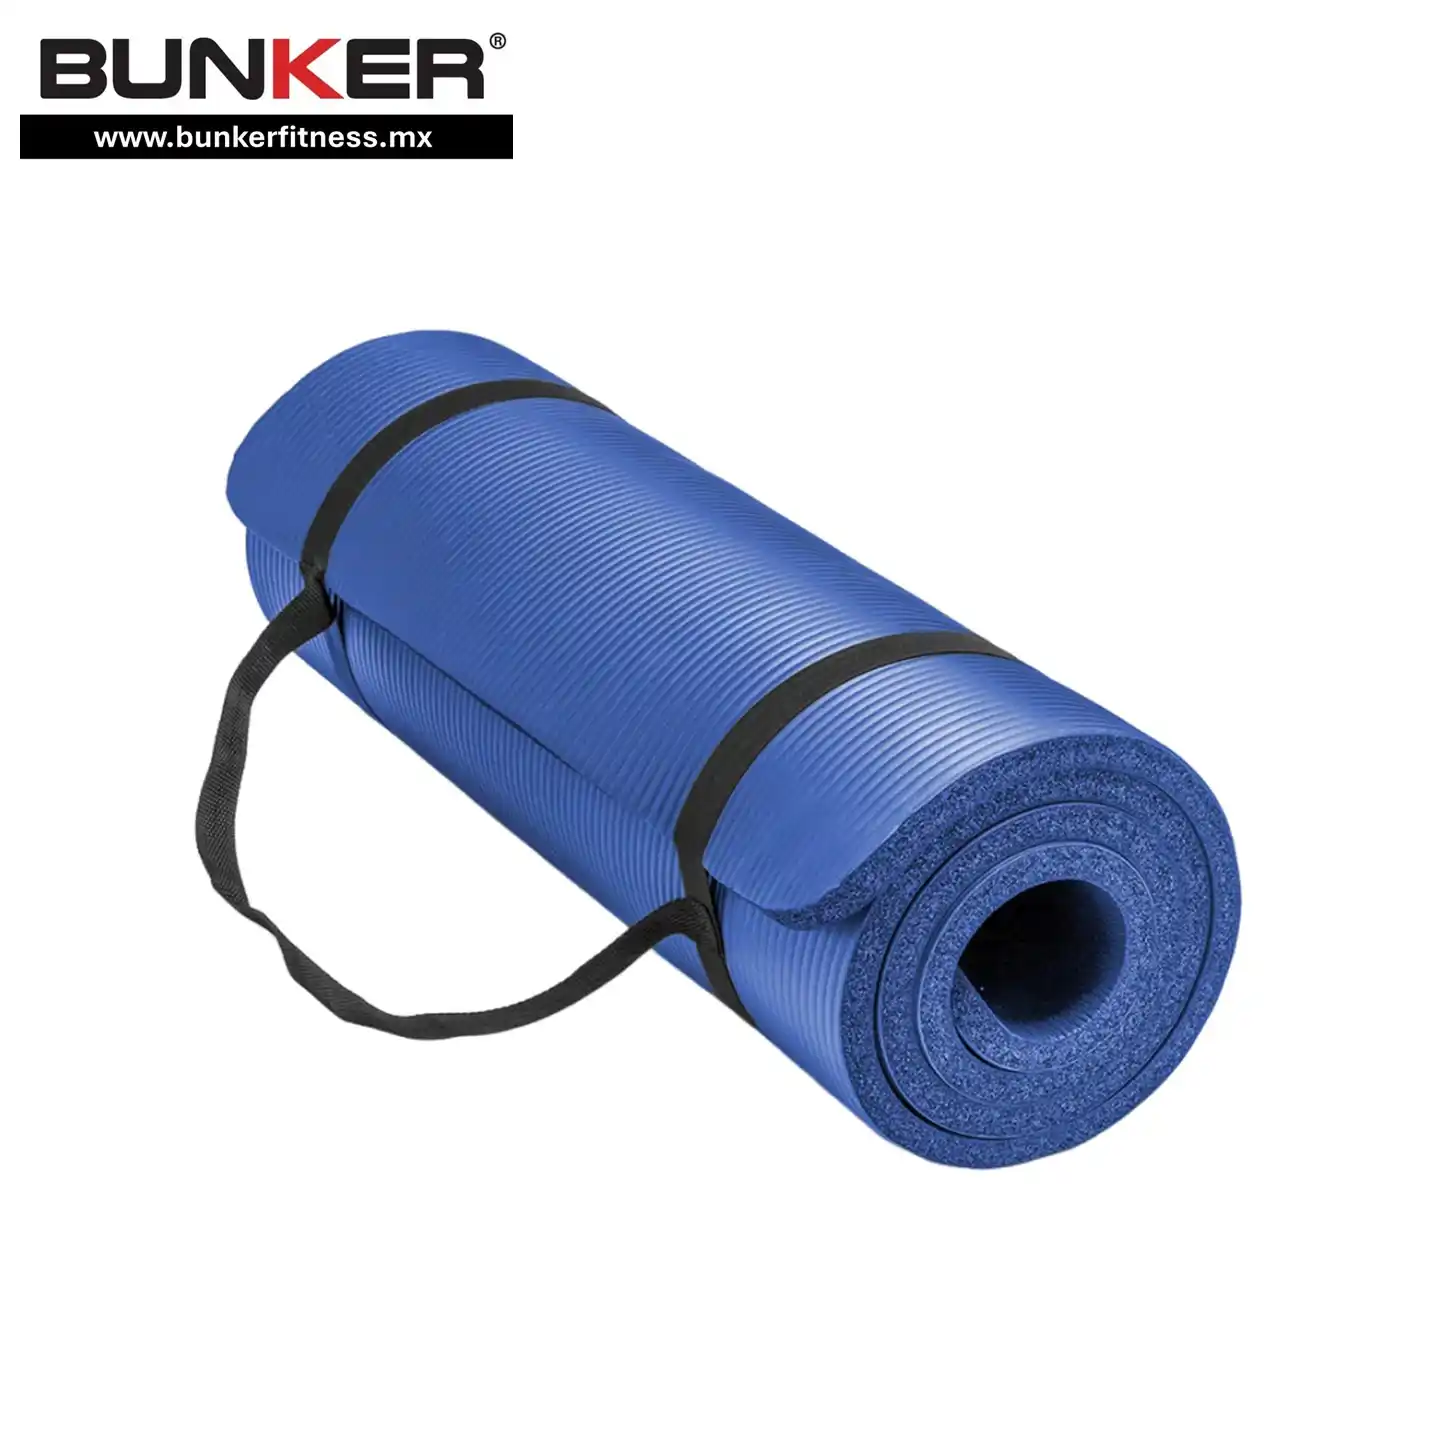 tapetes de yoga tapetes de piso bunker fitness para ejercicio y gimnasio en casa bunker gym bunker fitness